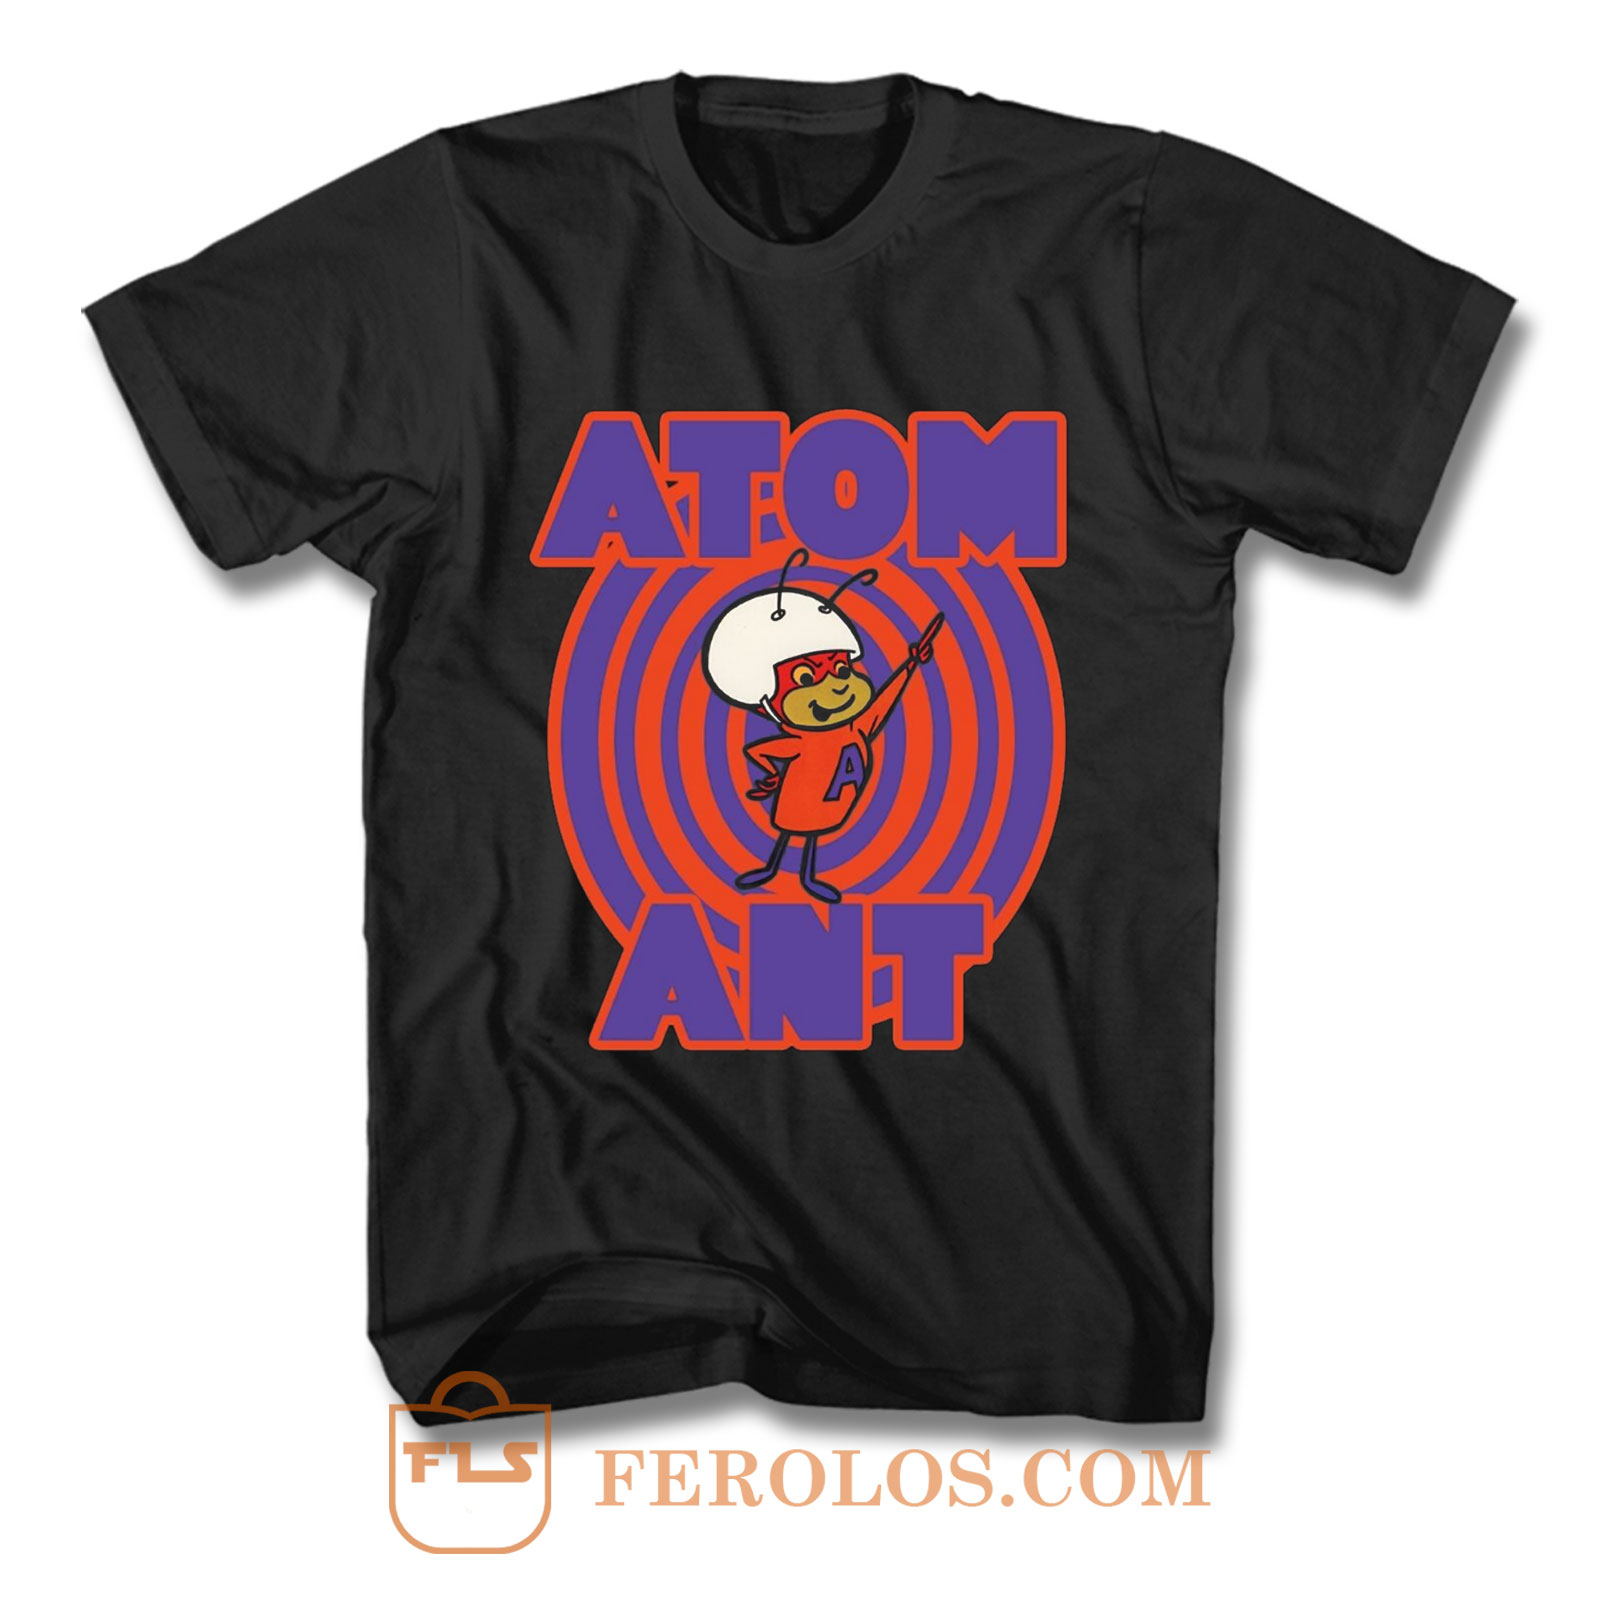 60's Hanna Barbera Cartoon Classic Atom Ant T Shirt 